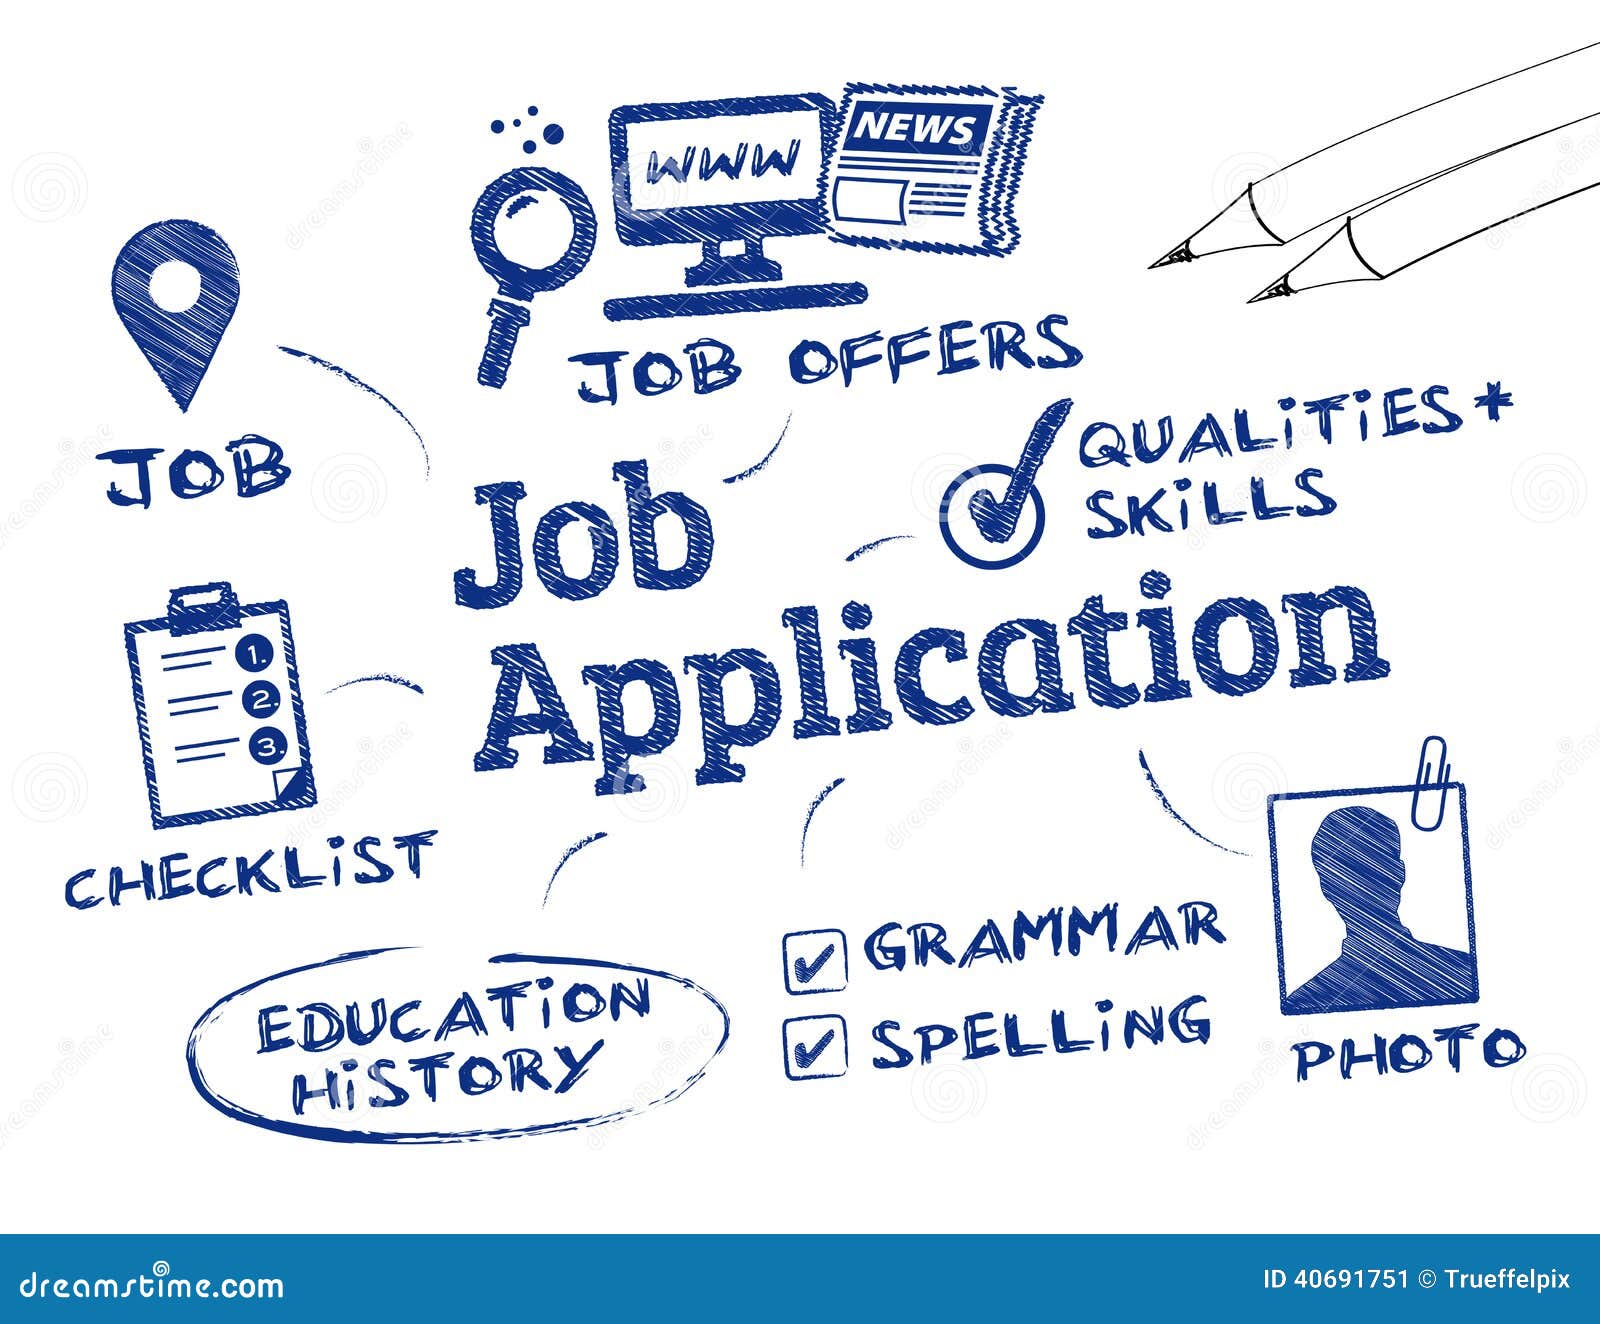 4 methods of applying for a job job